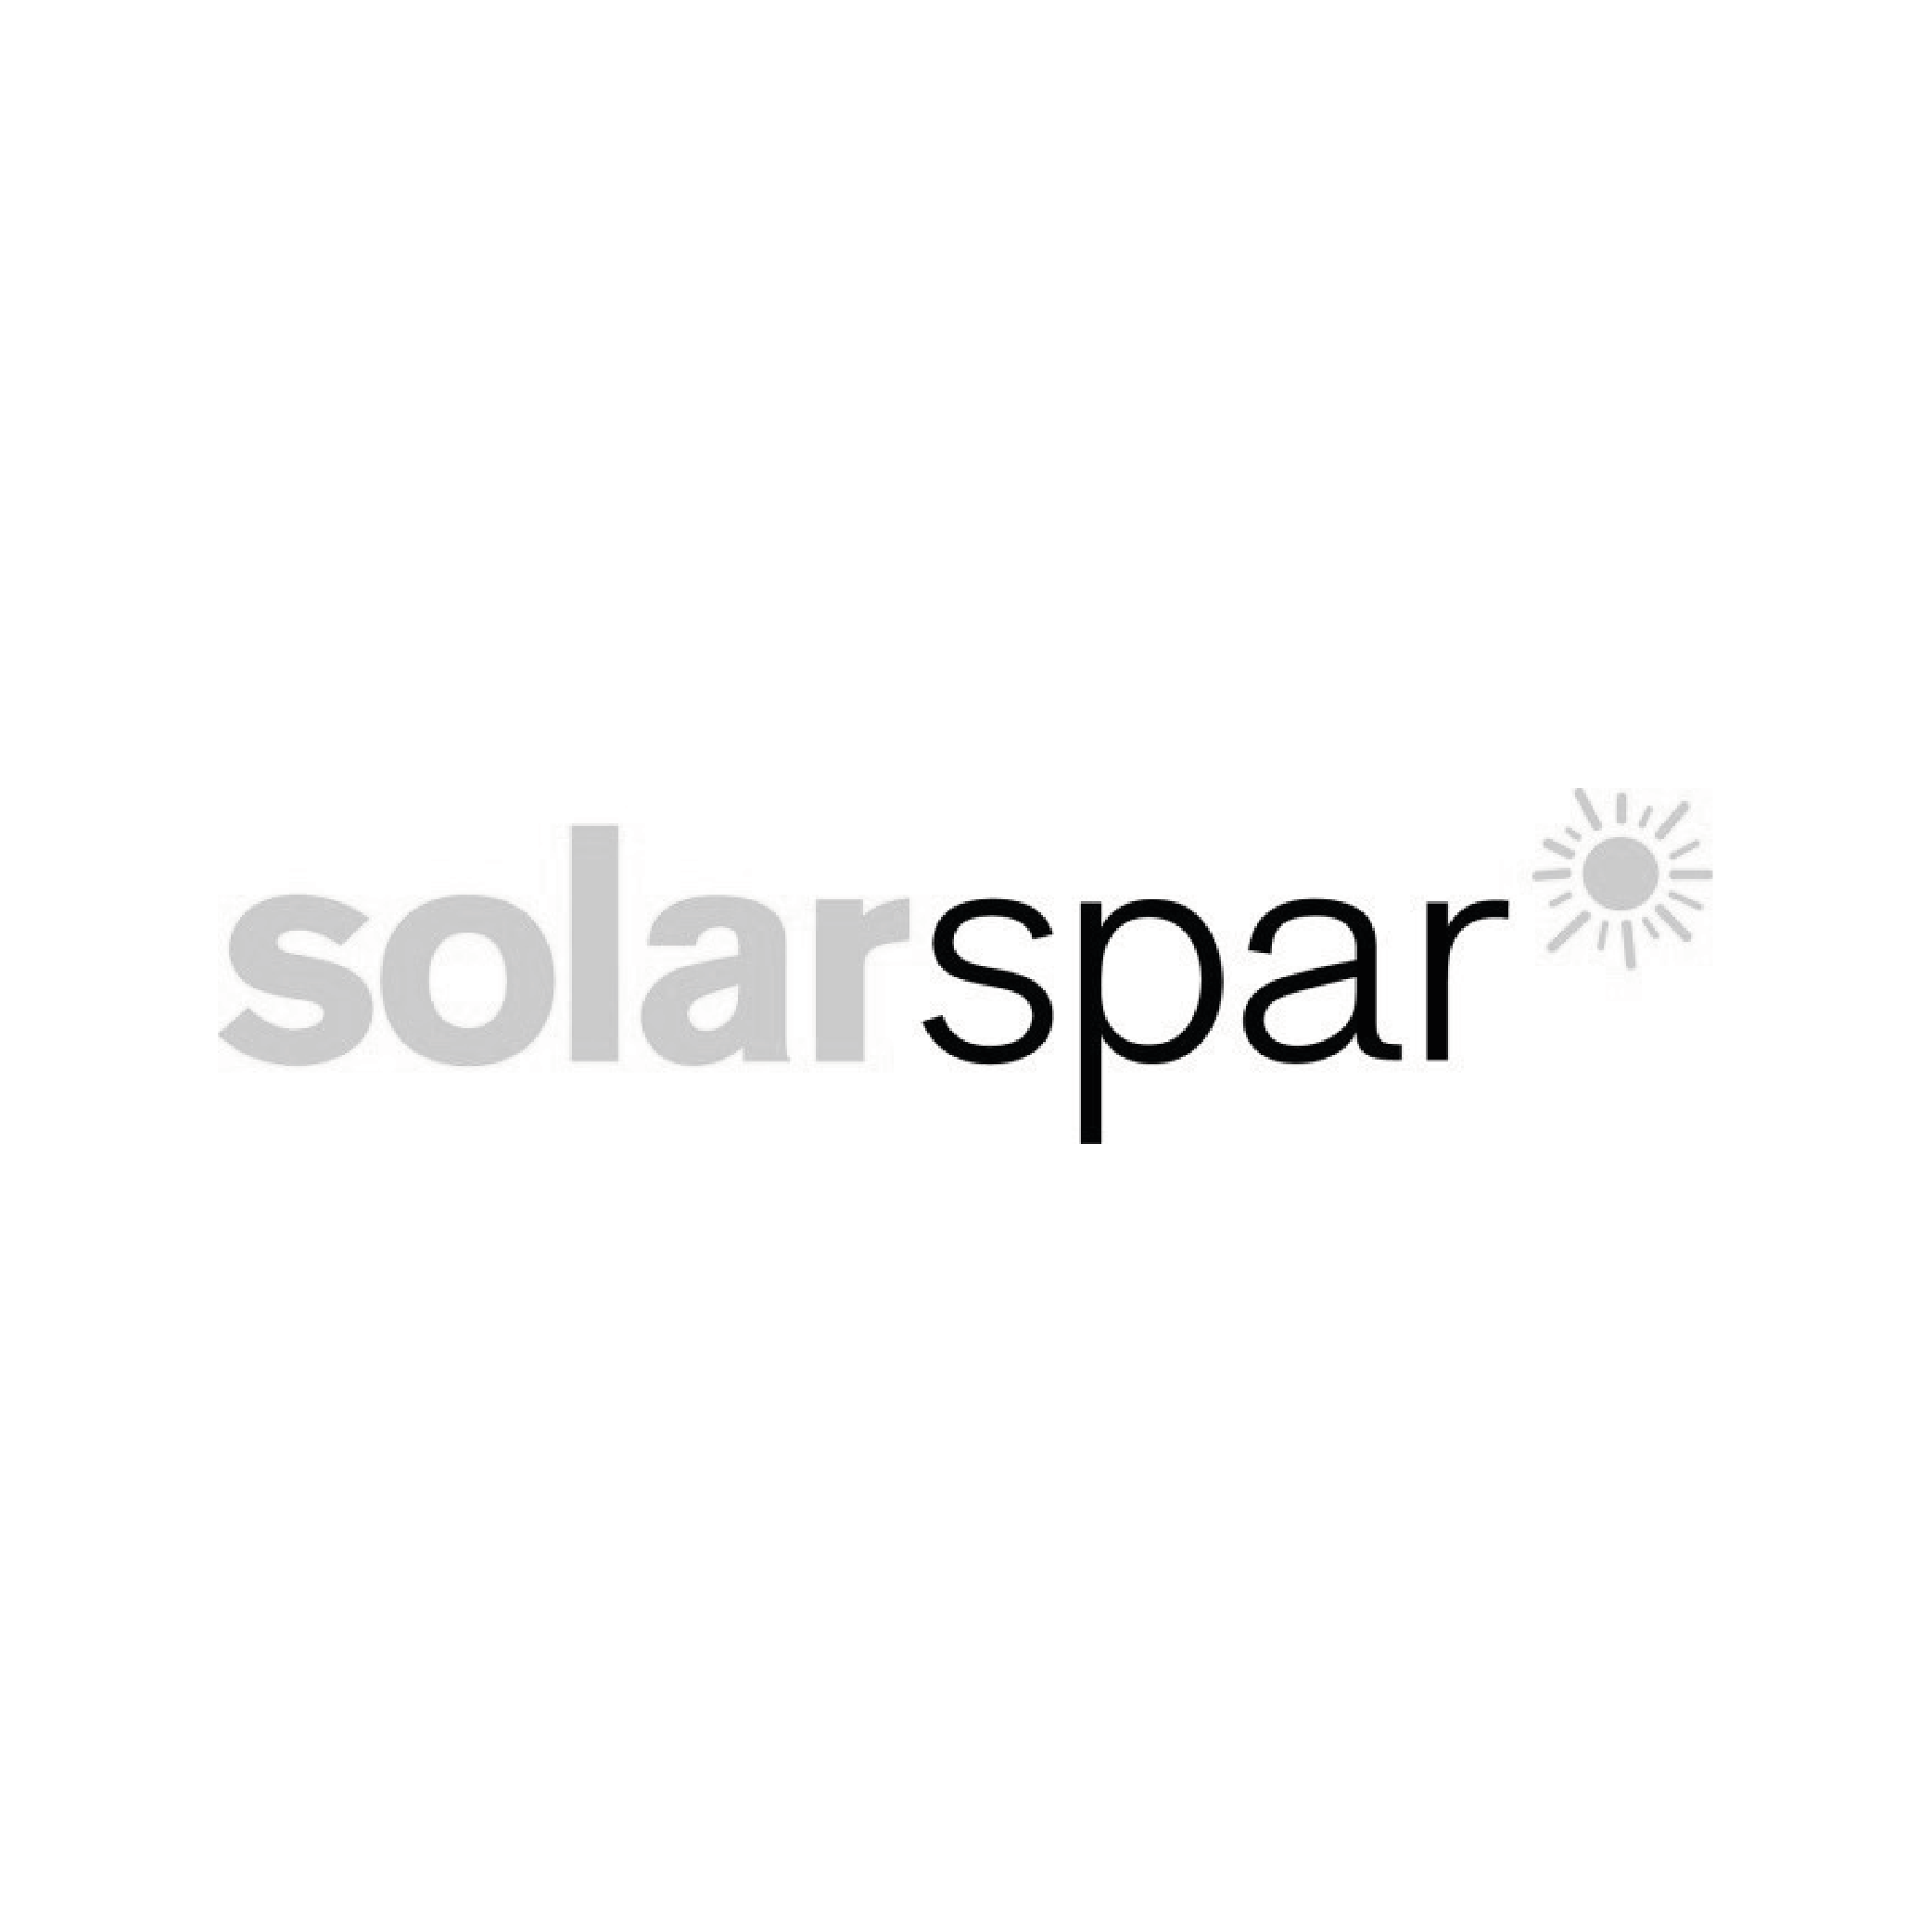 Logo_solarspar_dachkomitee_de